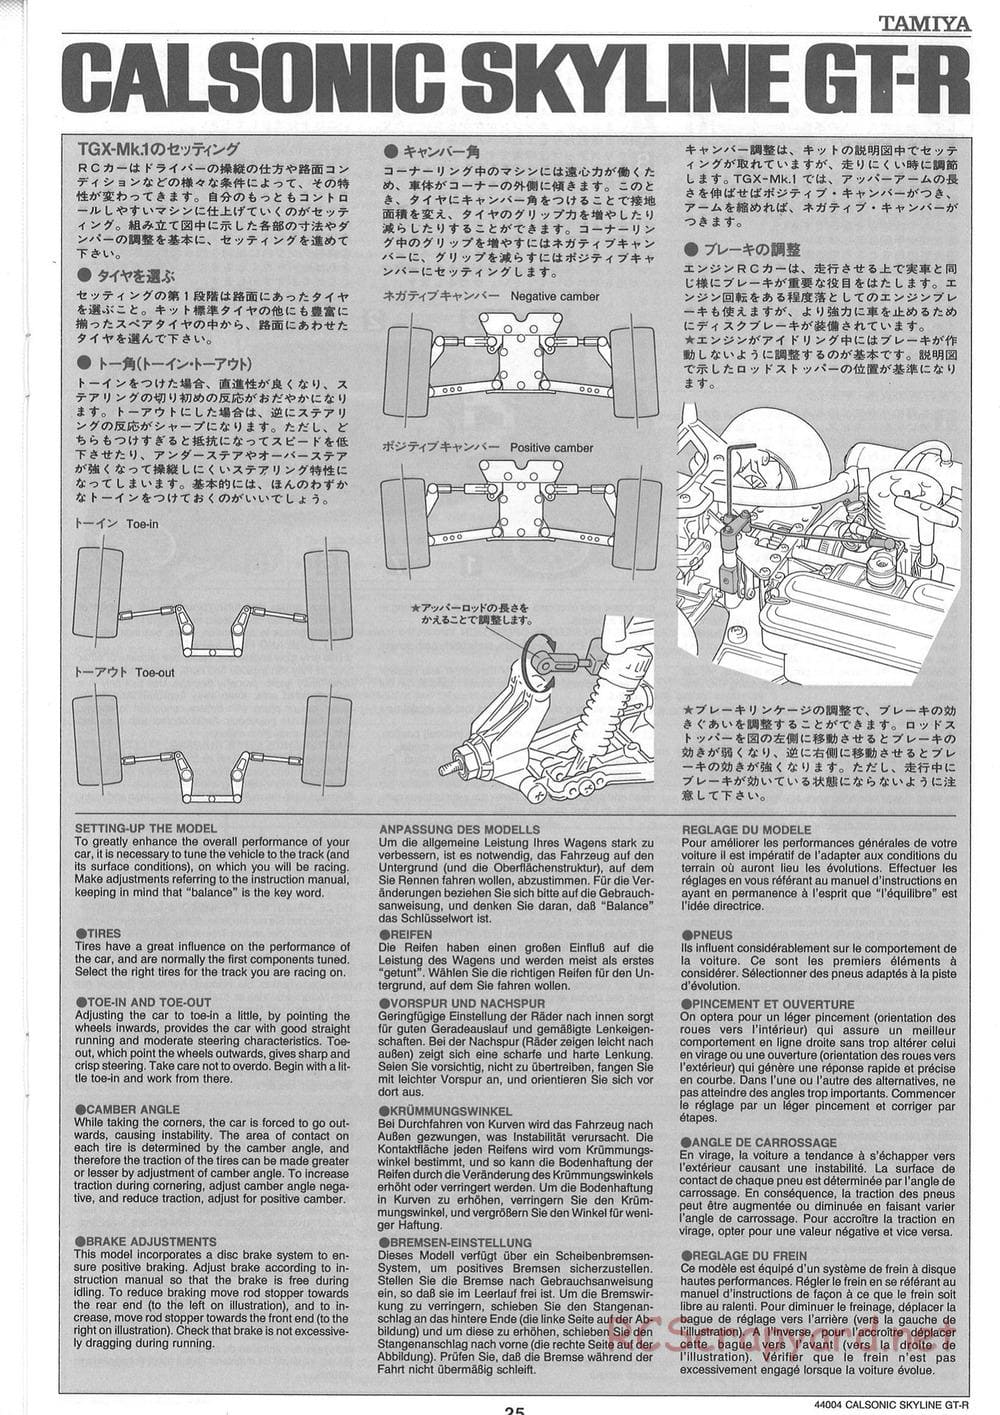 Tamiya - Calsonic GT-R - TGX Mk.1 Chassis - Manual - Page 25